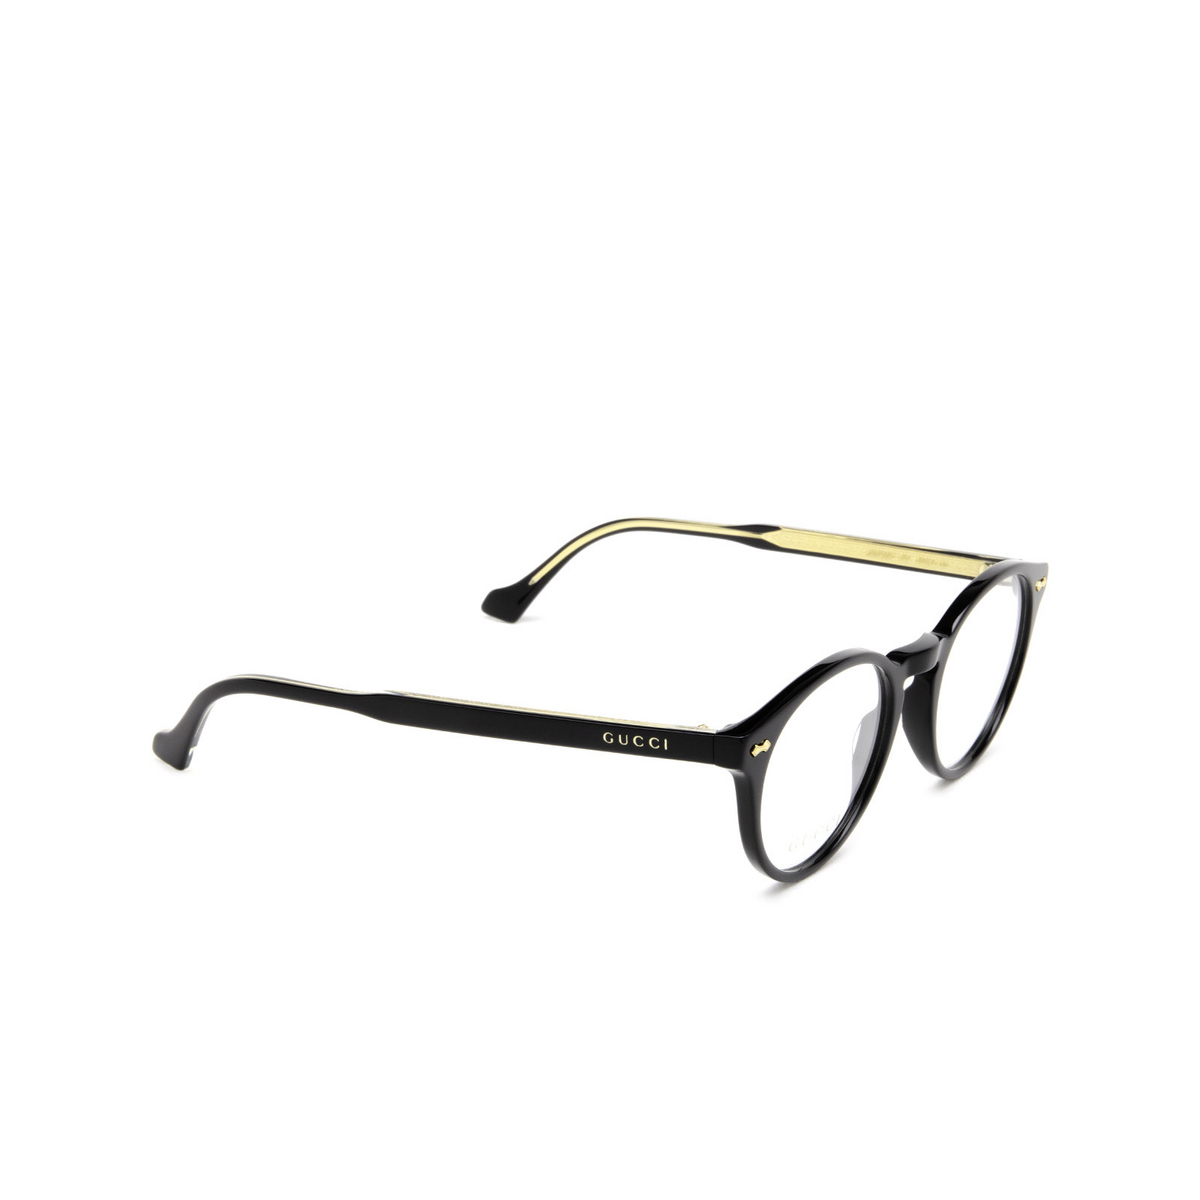 Gucci® Round Eyeglasses: GG0738O color Black 001 - three-quarters view.